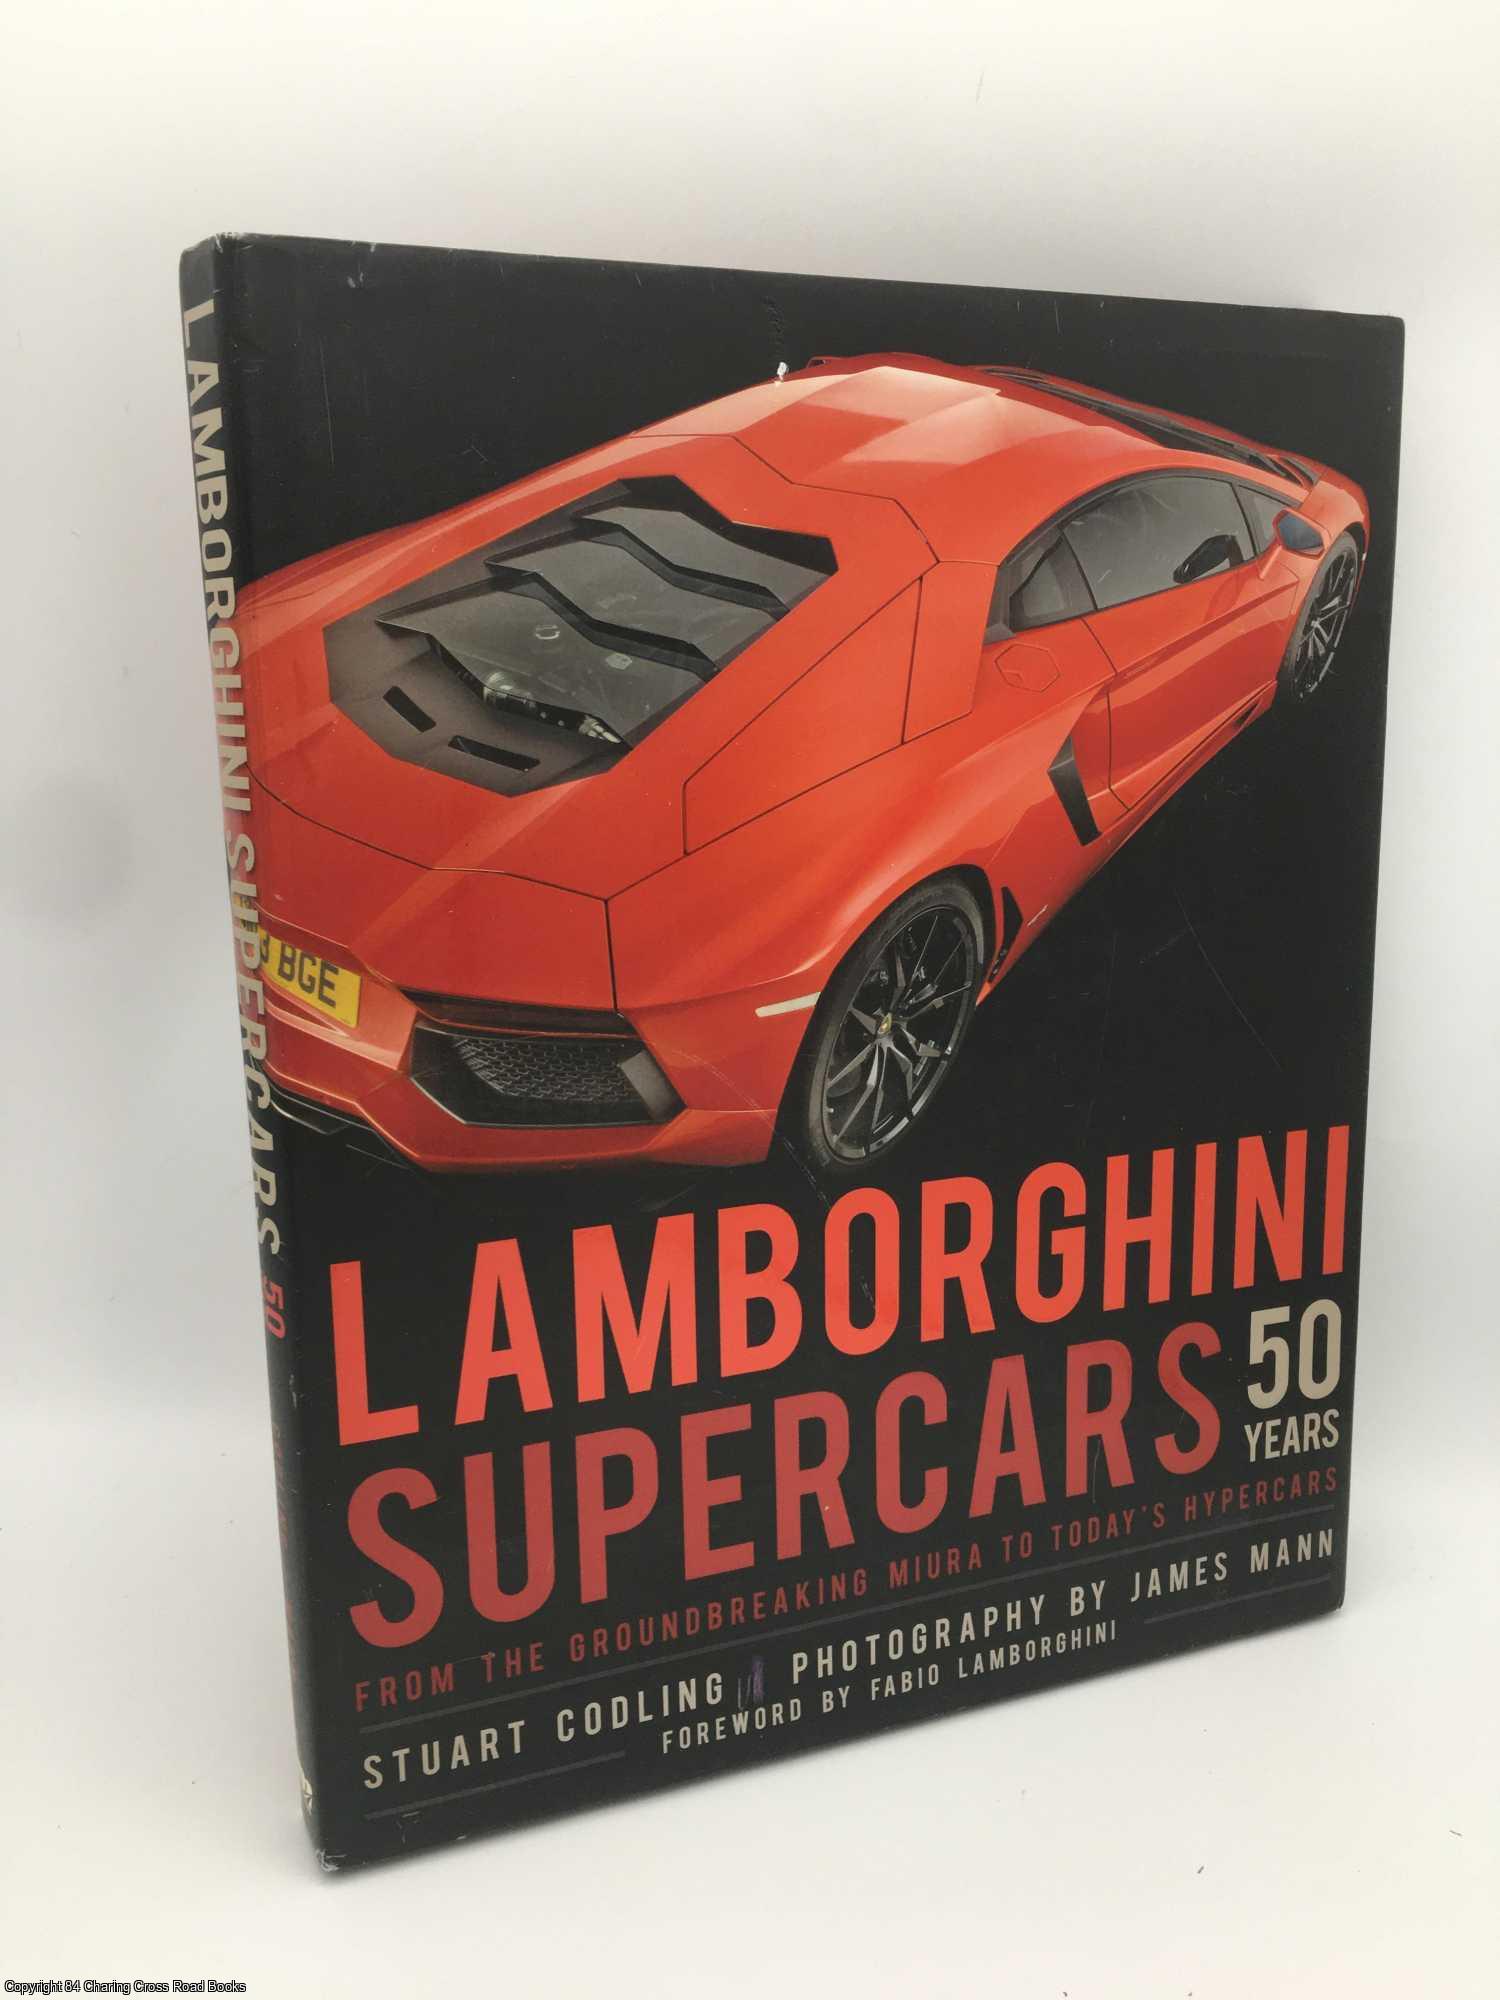 Codling, Stuart - Lamborghini Supercars 50 Years: From the Groundbreaking Miura to Today's Hypercars - Foreword by Fabio Lamborghini